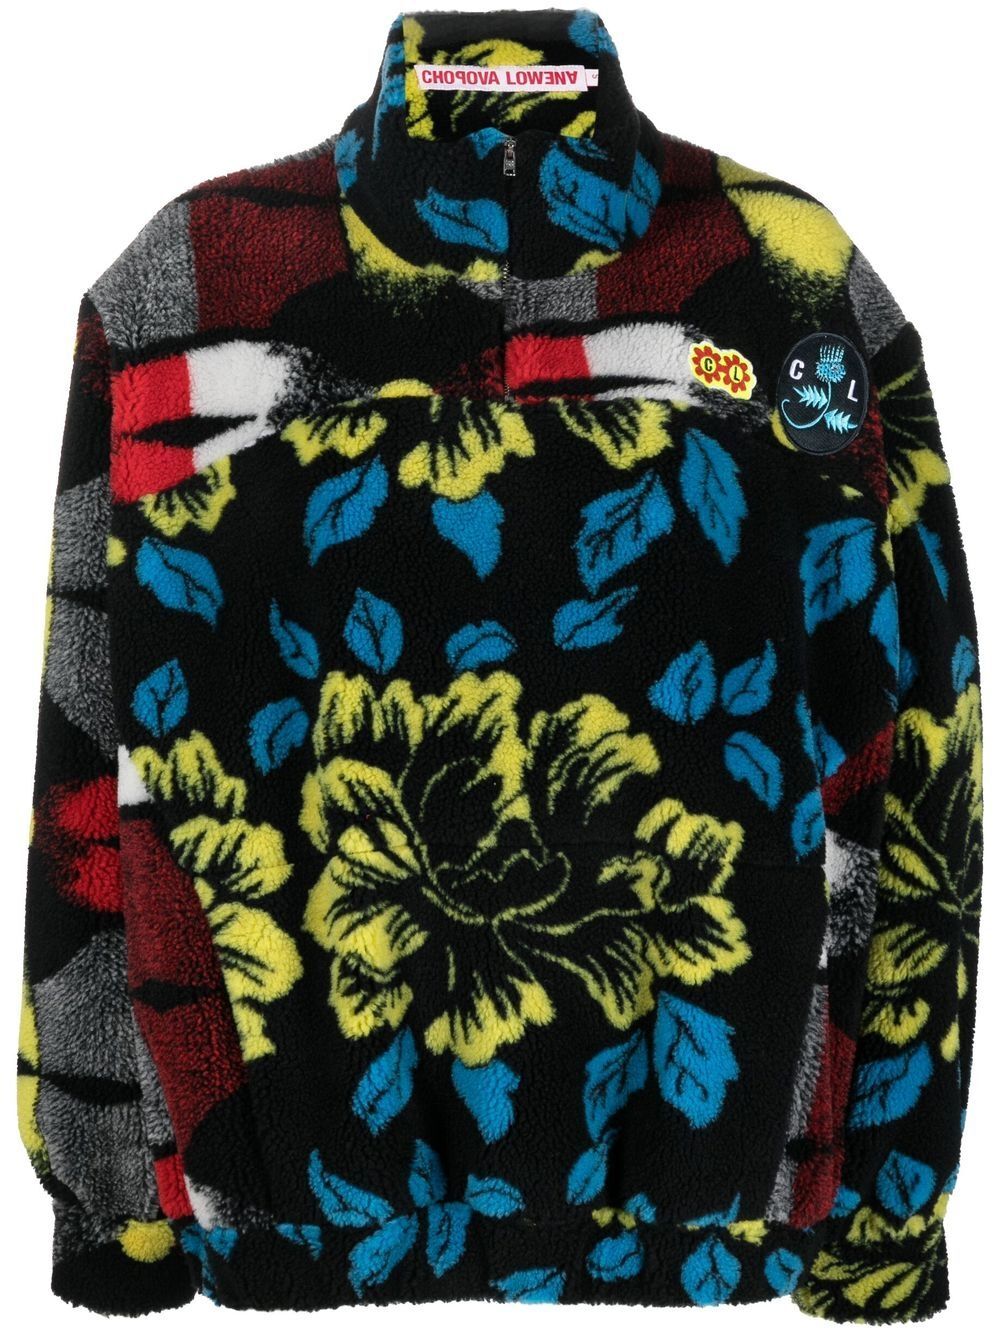 Chopova Lowena floral-print fleece pullover - Black